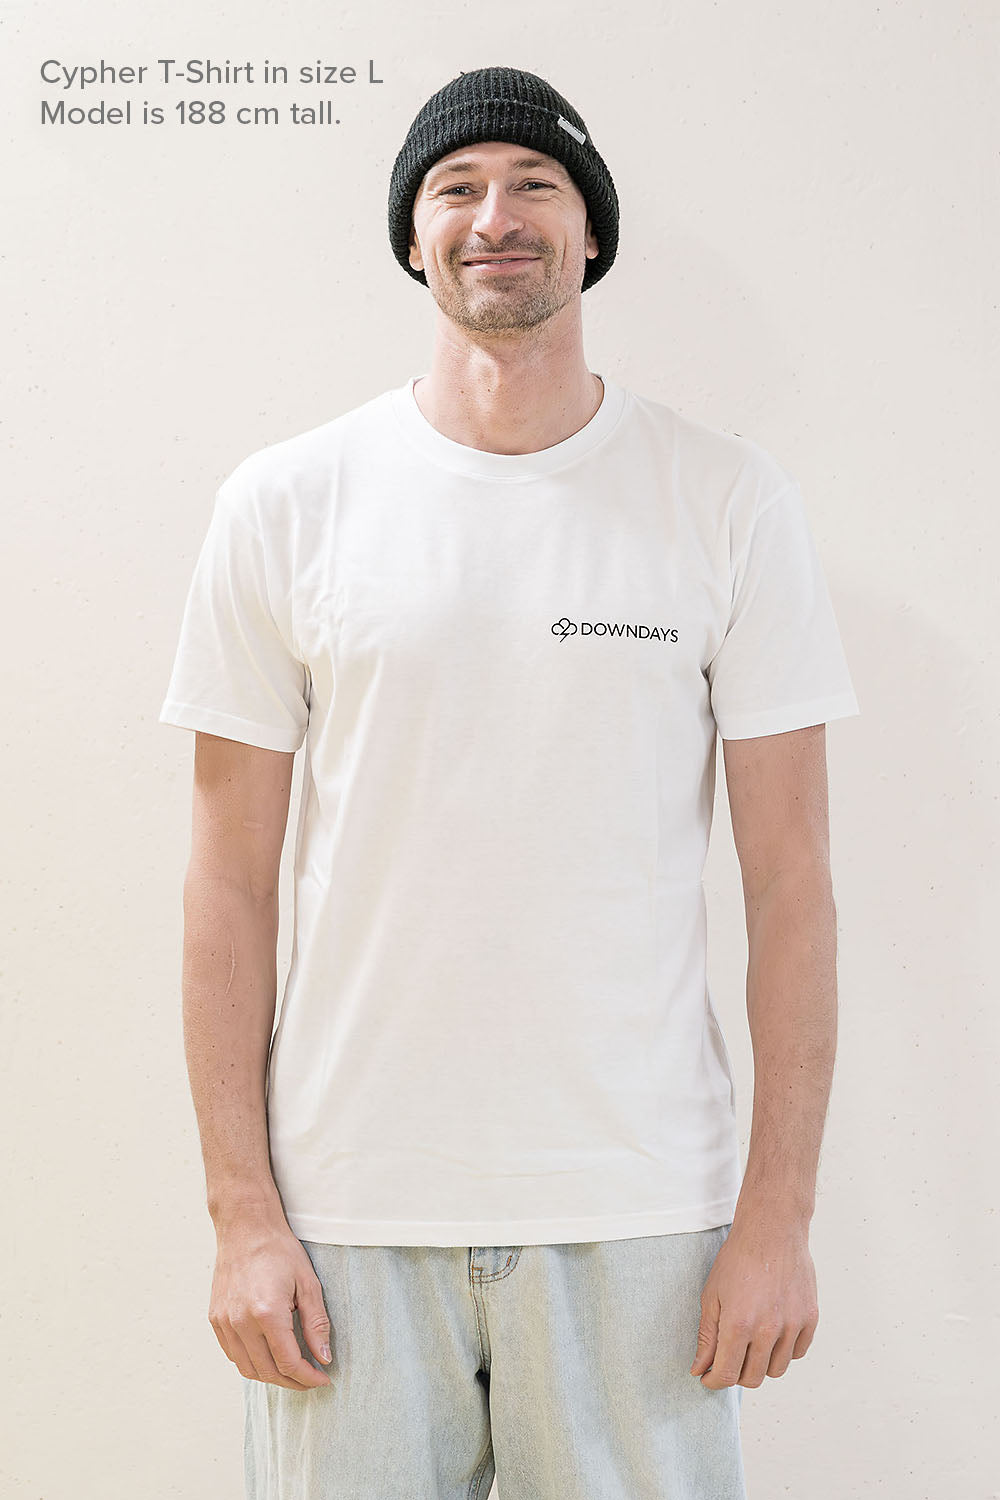 Cypher T-shirt